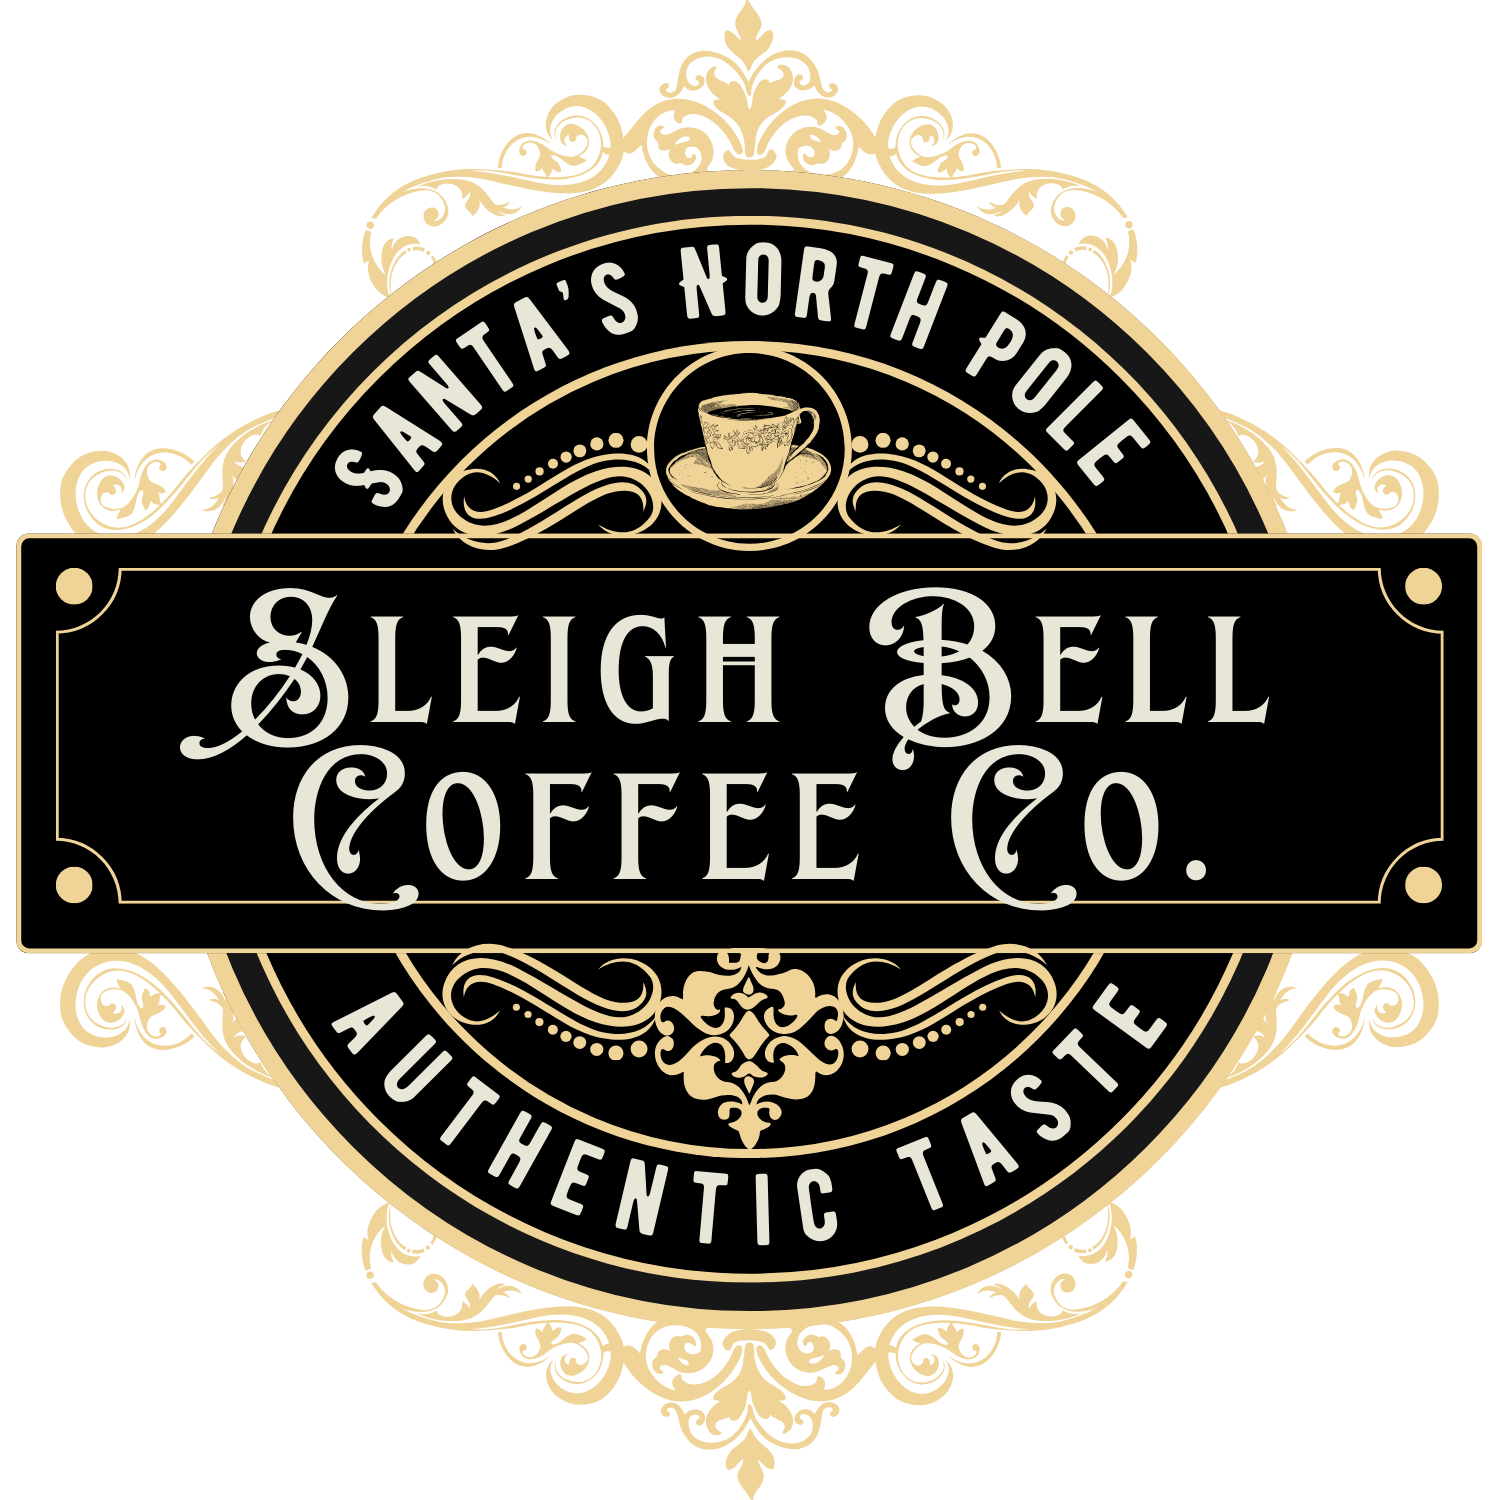 Sleigh Bell Coffee Co.